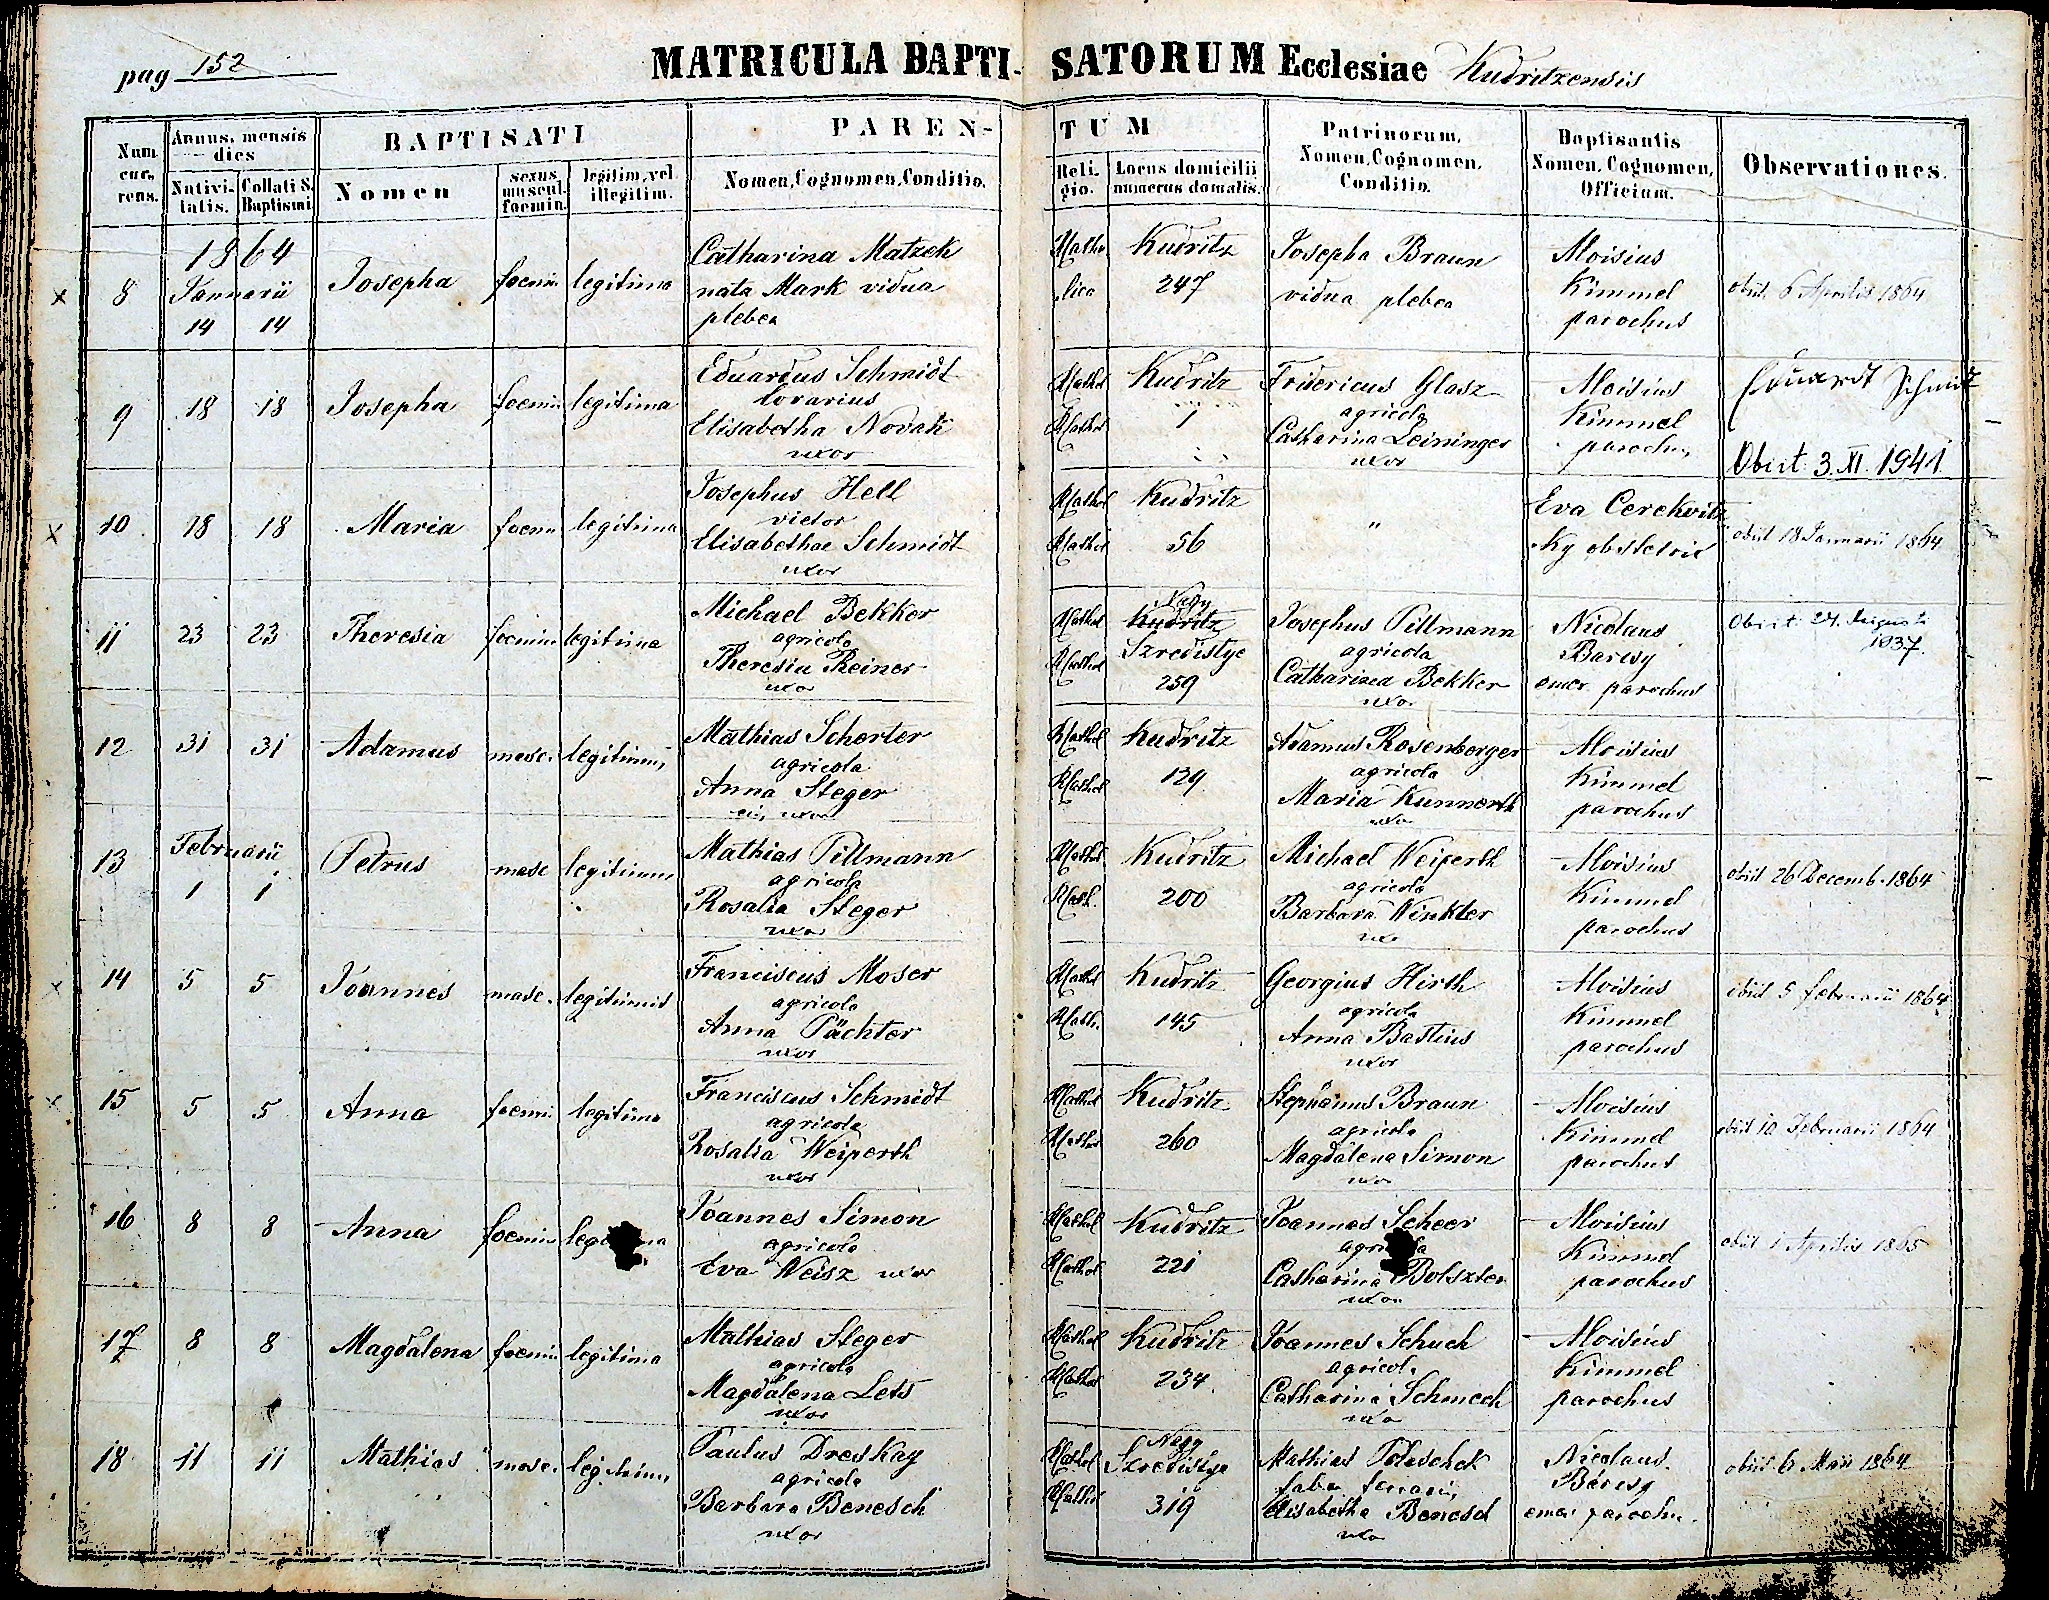 images/church_records/BIRTHS/1852-1870B/152